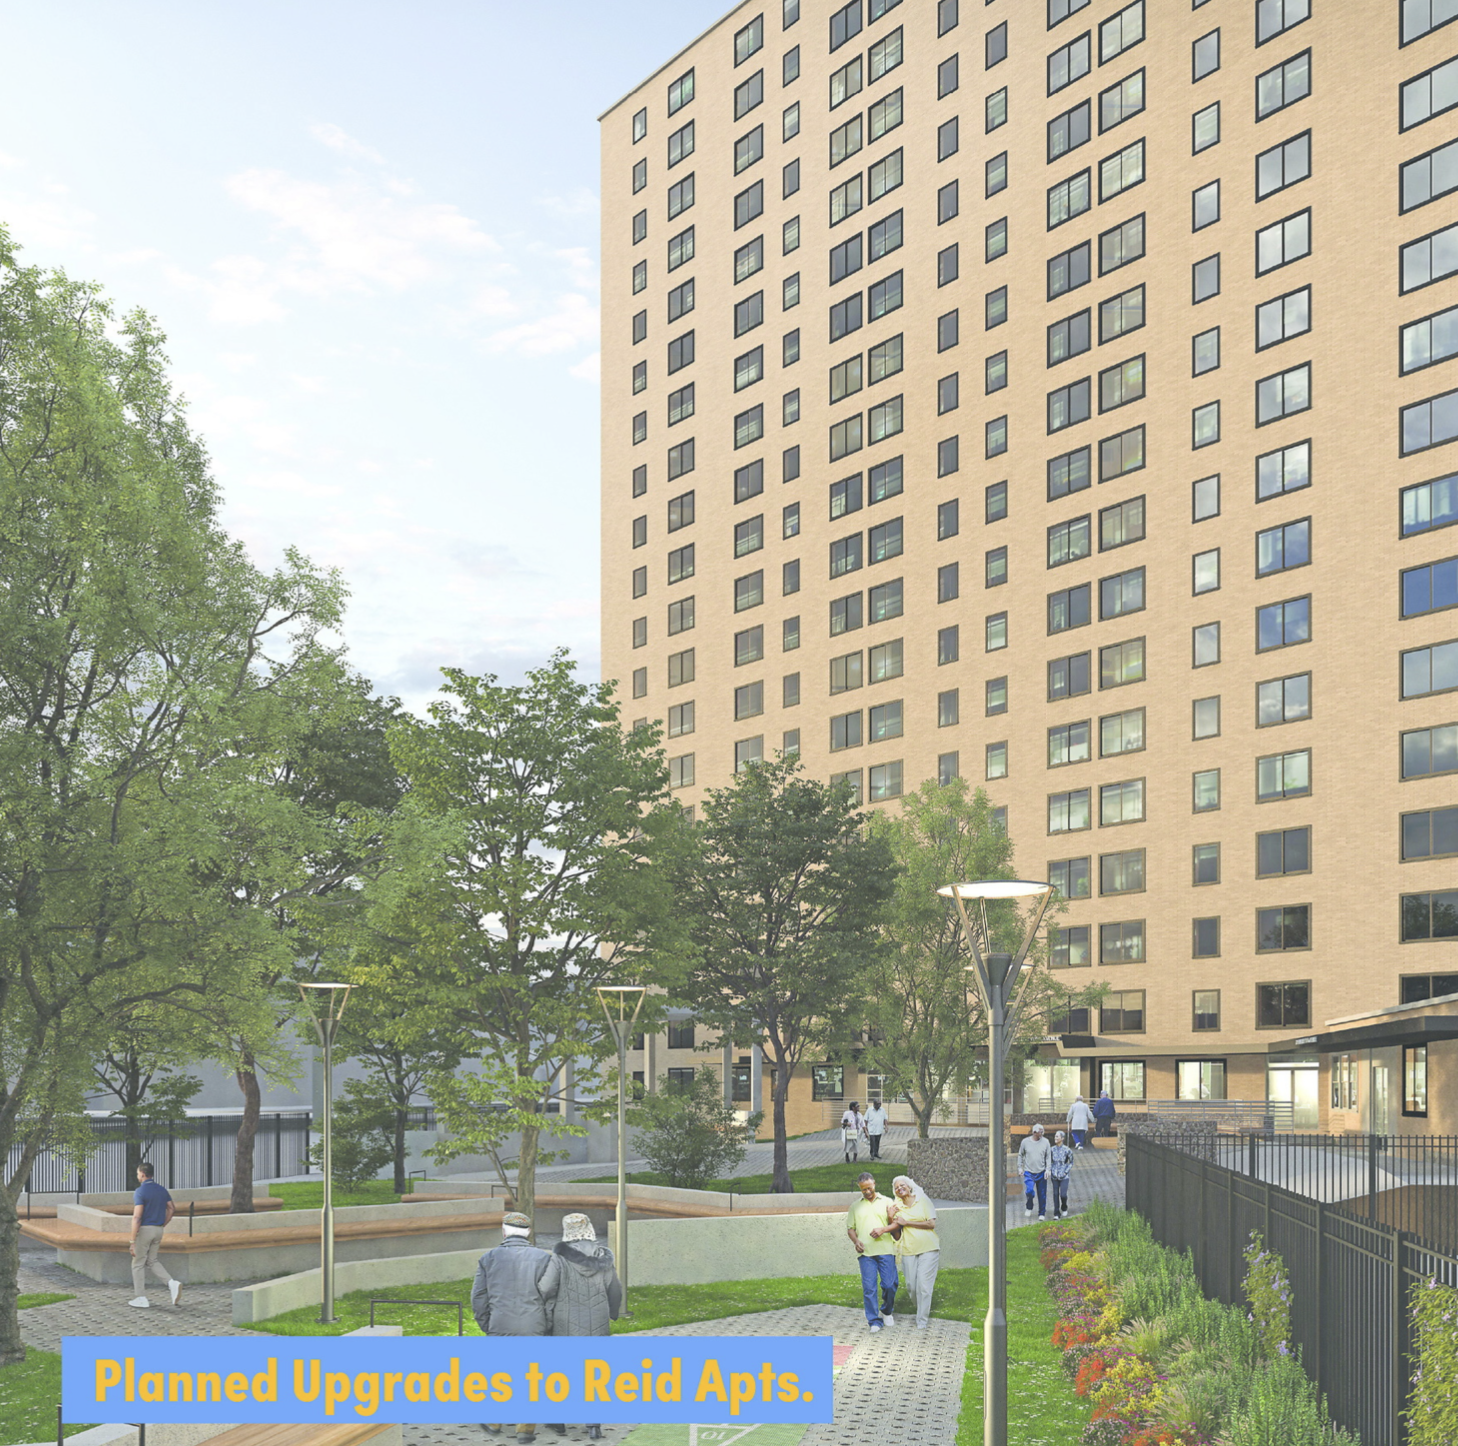 Planned Upgrades to Reid Apartments, via nyc.gov